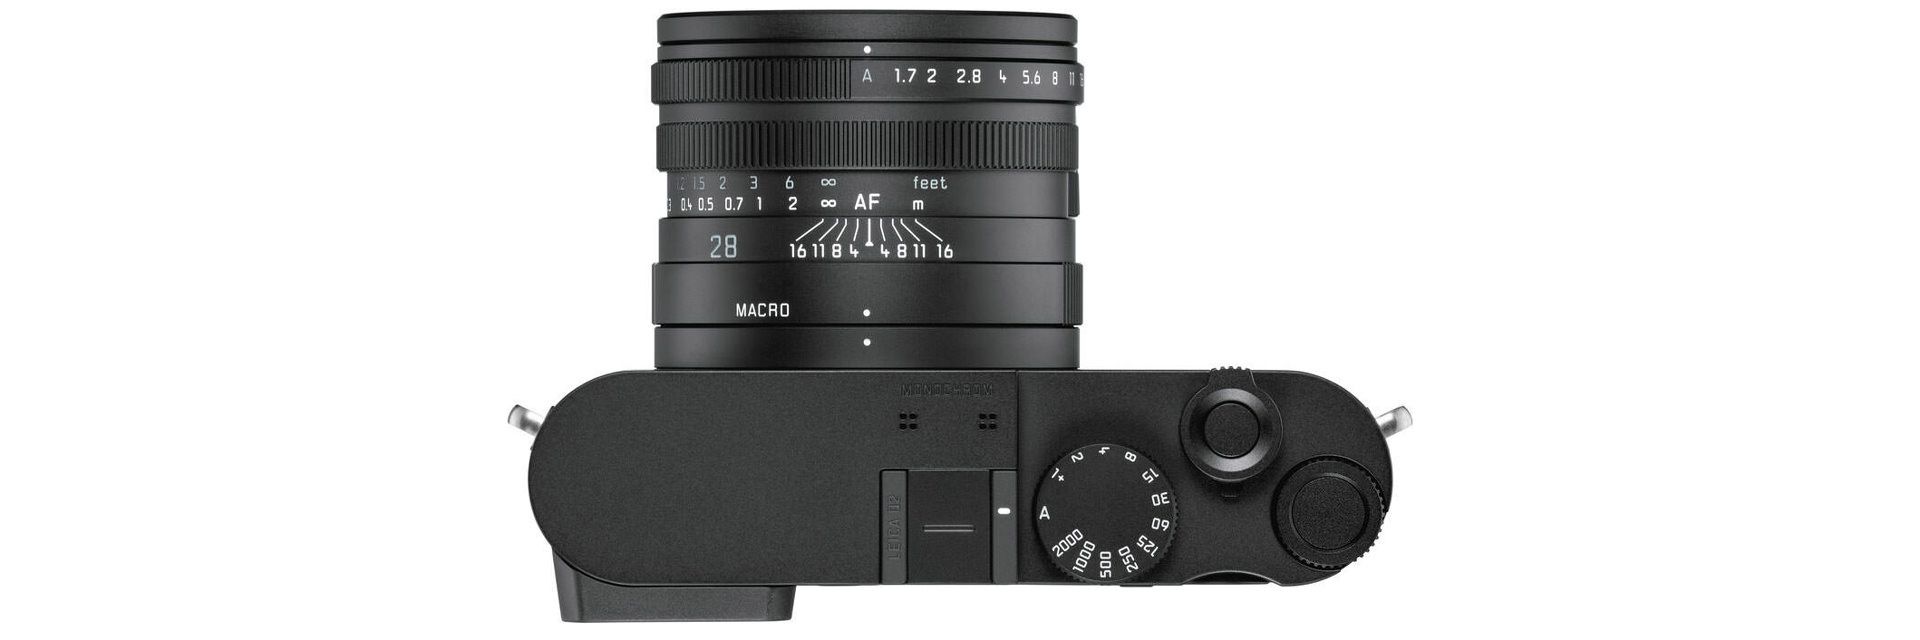 Top of Leica Q2 Monochrom / Leica Q2 Monochrom